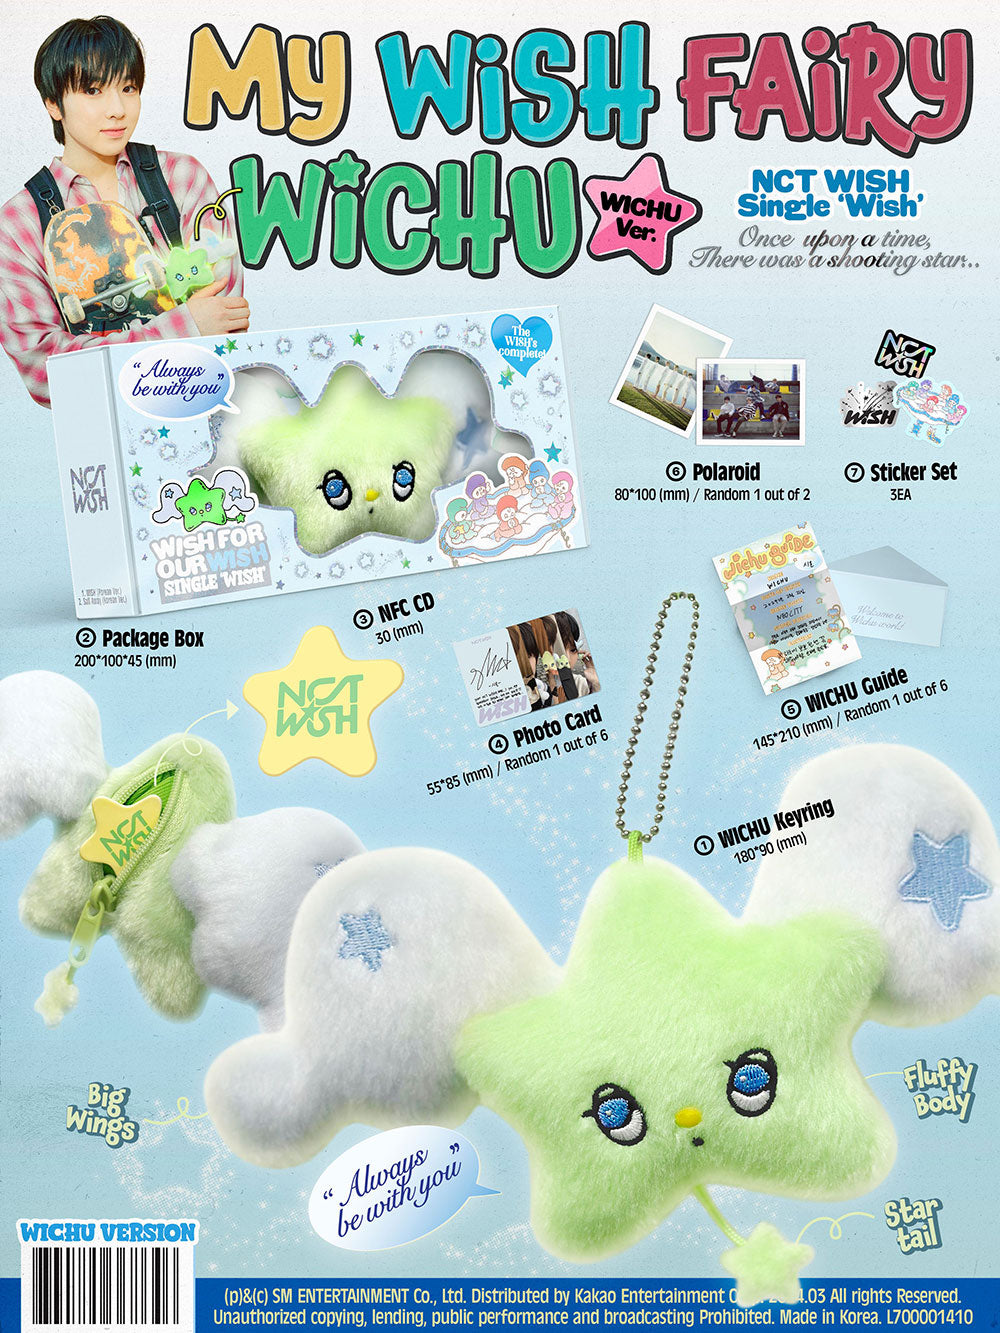 NCT WISH - Debut Single [WISH] WICHU Ver. (SMART ALBUM)